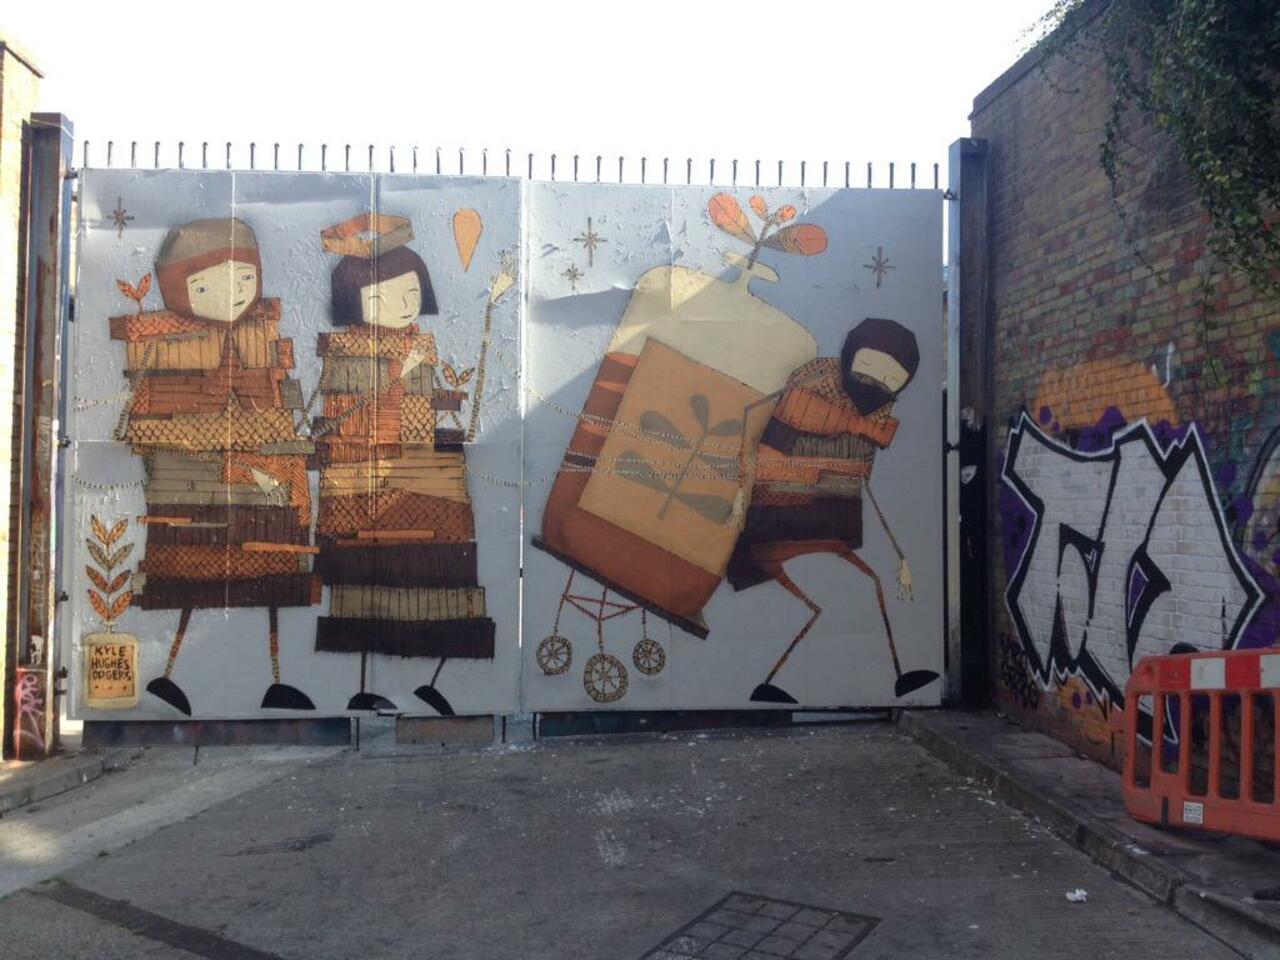 #streetart #art #london #Shoreditch #graffiti #photo #photography #uk #tweetart http://t.co/VLOryIBCS2